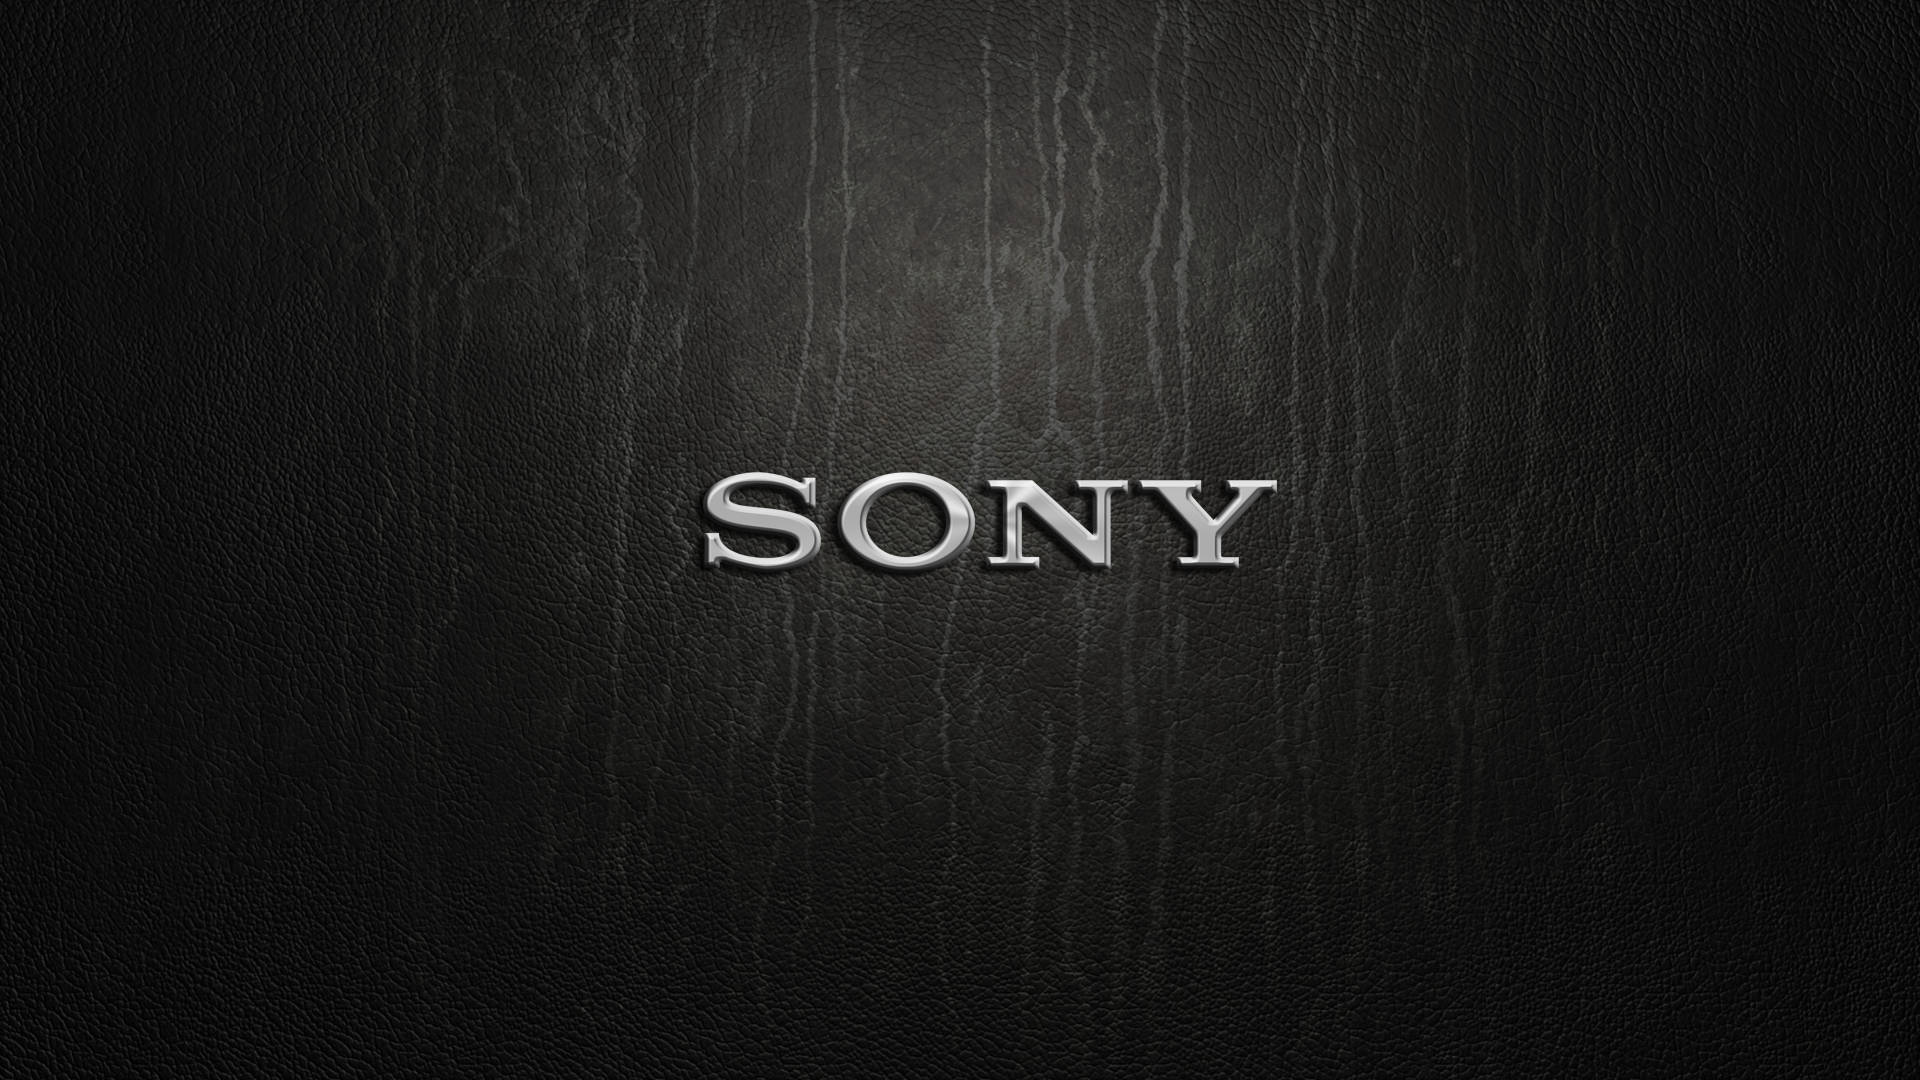 Sony Background Wallpaper